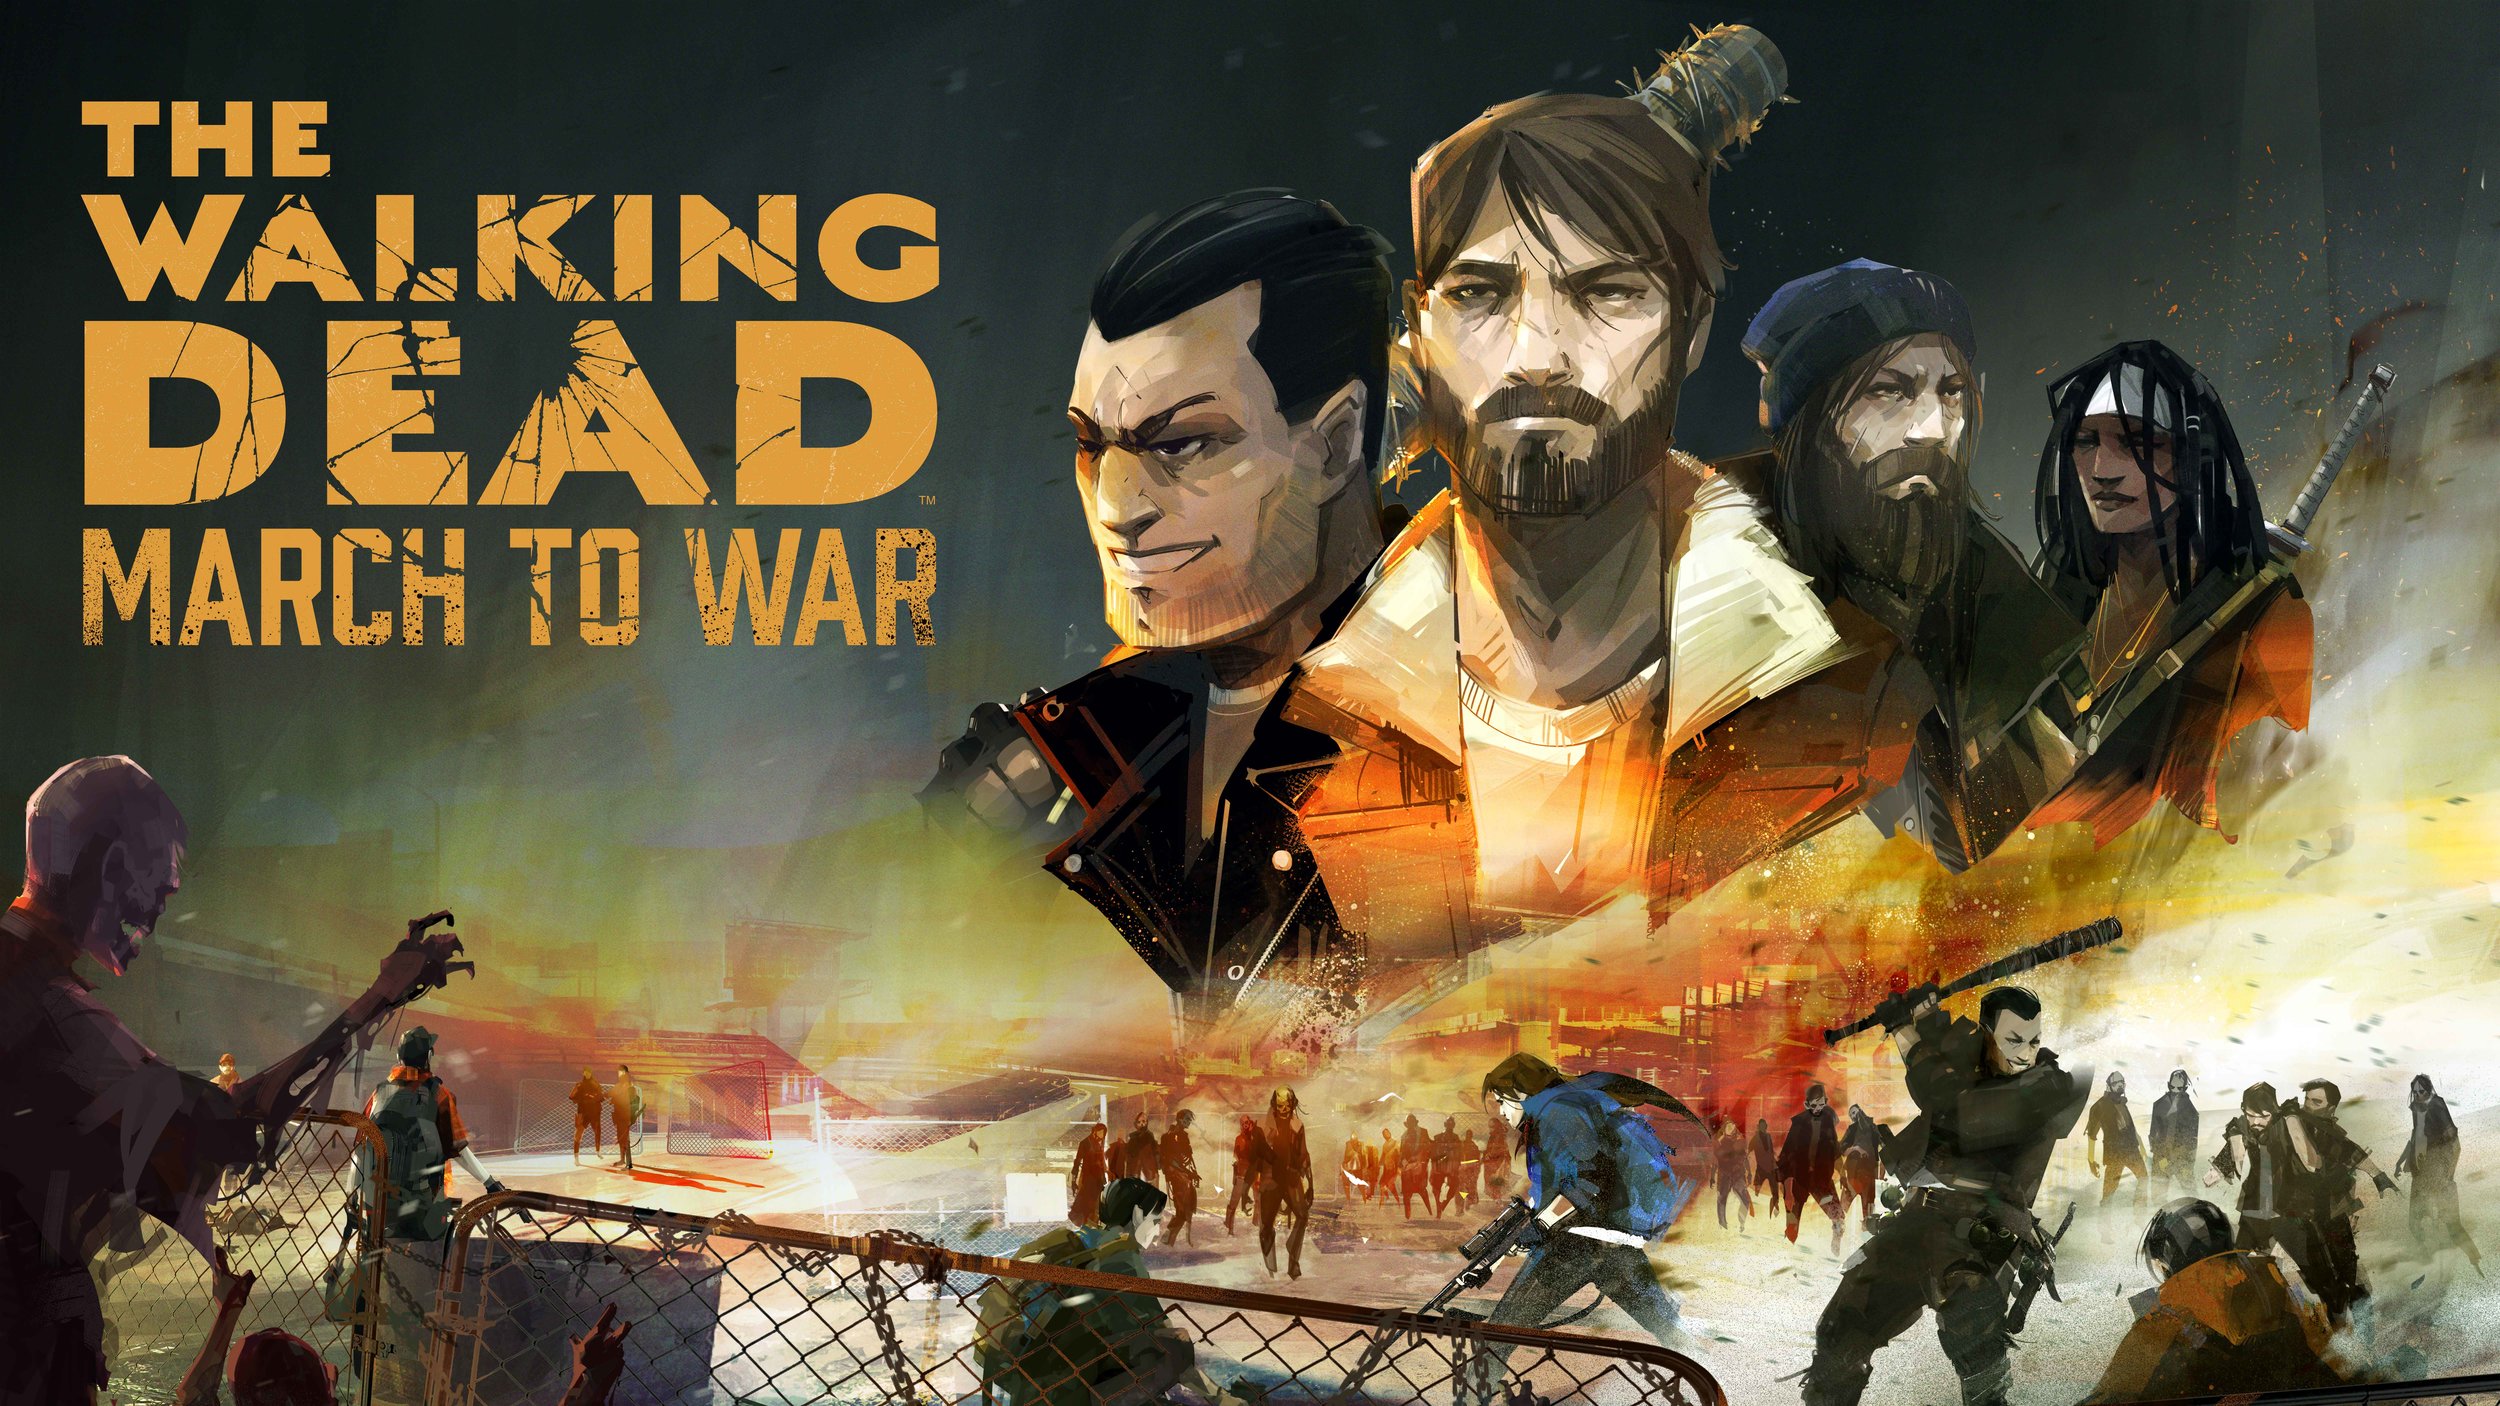 The Walking Dead March to War